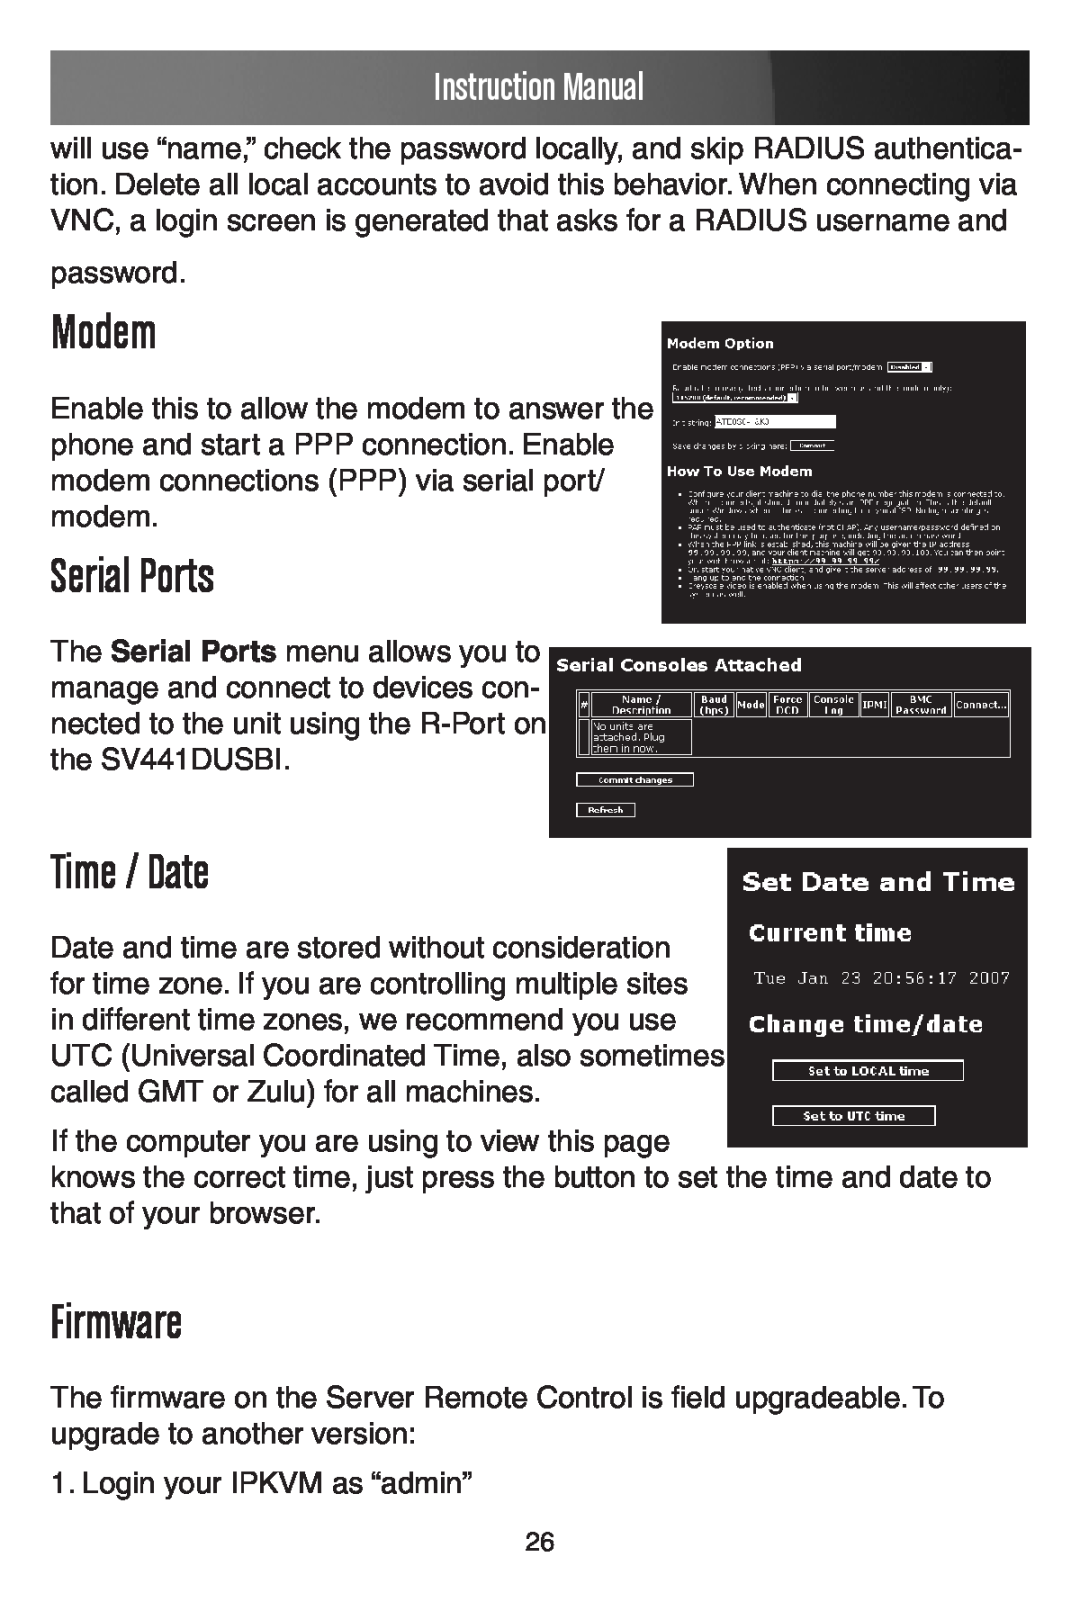 StarTech.com SV441DUSBI instruction manual Modem, Serial Ports, Time / Date, Firmware, Instruction Manual 